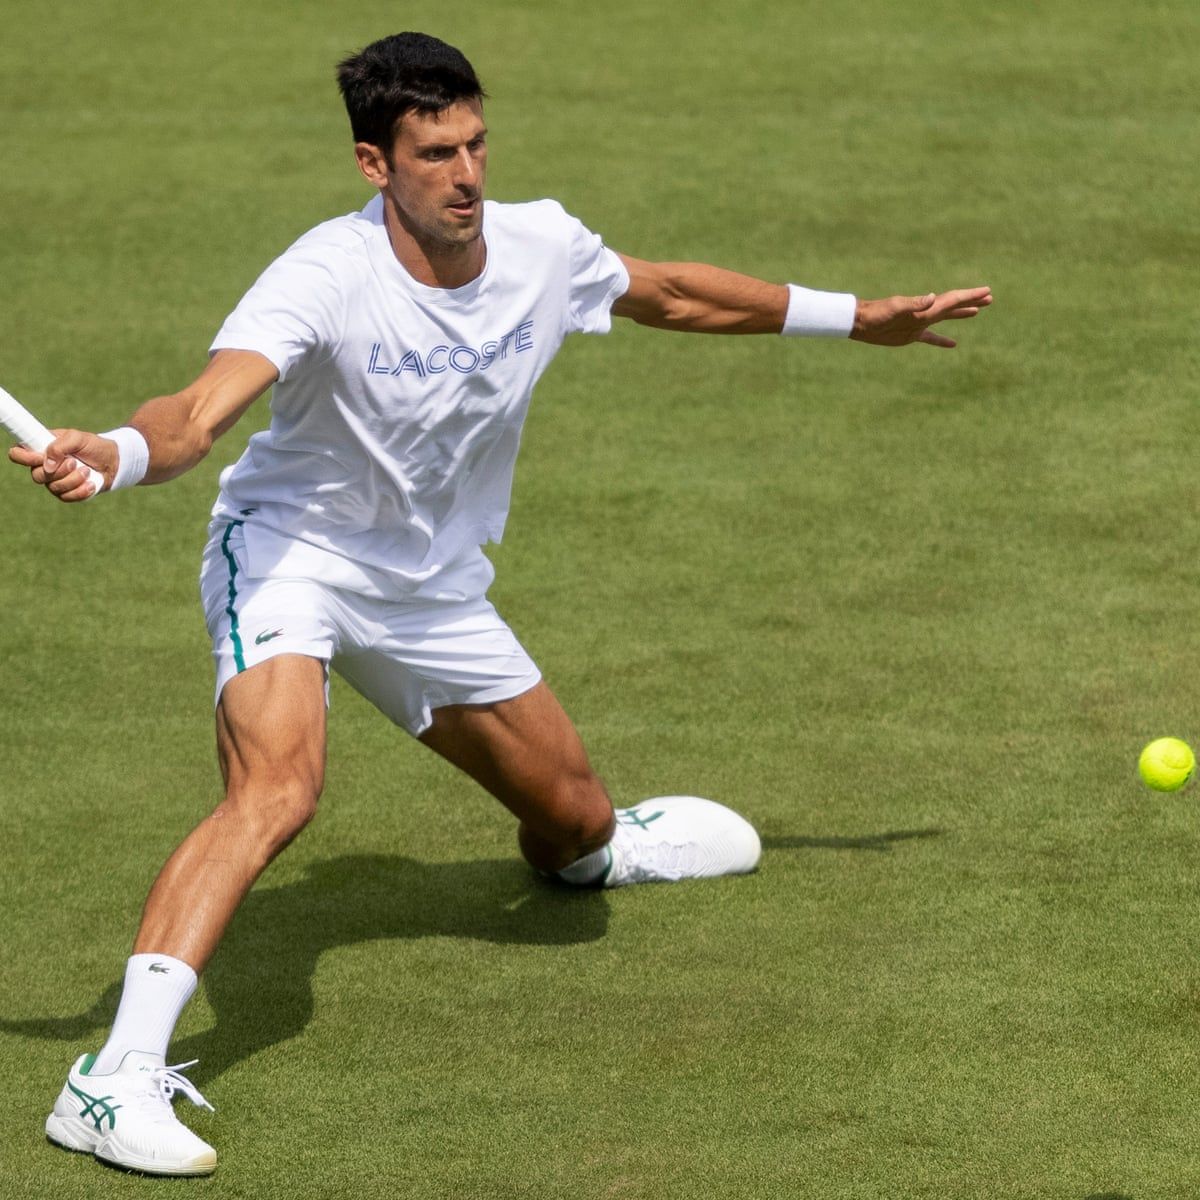 Winning return could take Djokovic to hallowed ground at Wimbledon